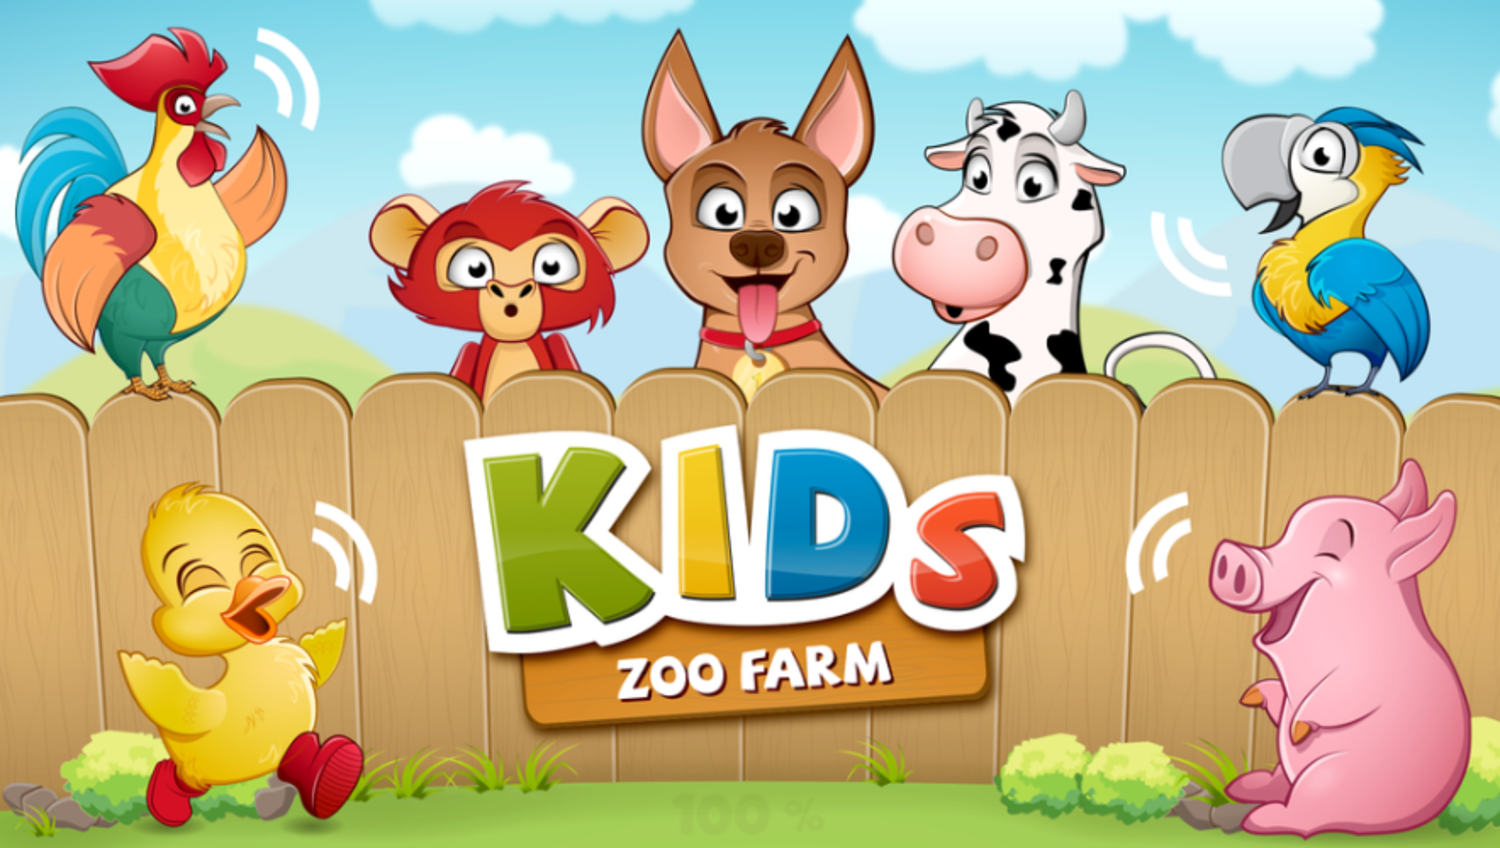 Kids Zoo Farm Game Welcome Screen Screenshot.